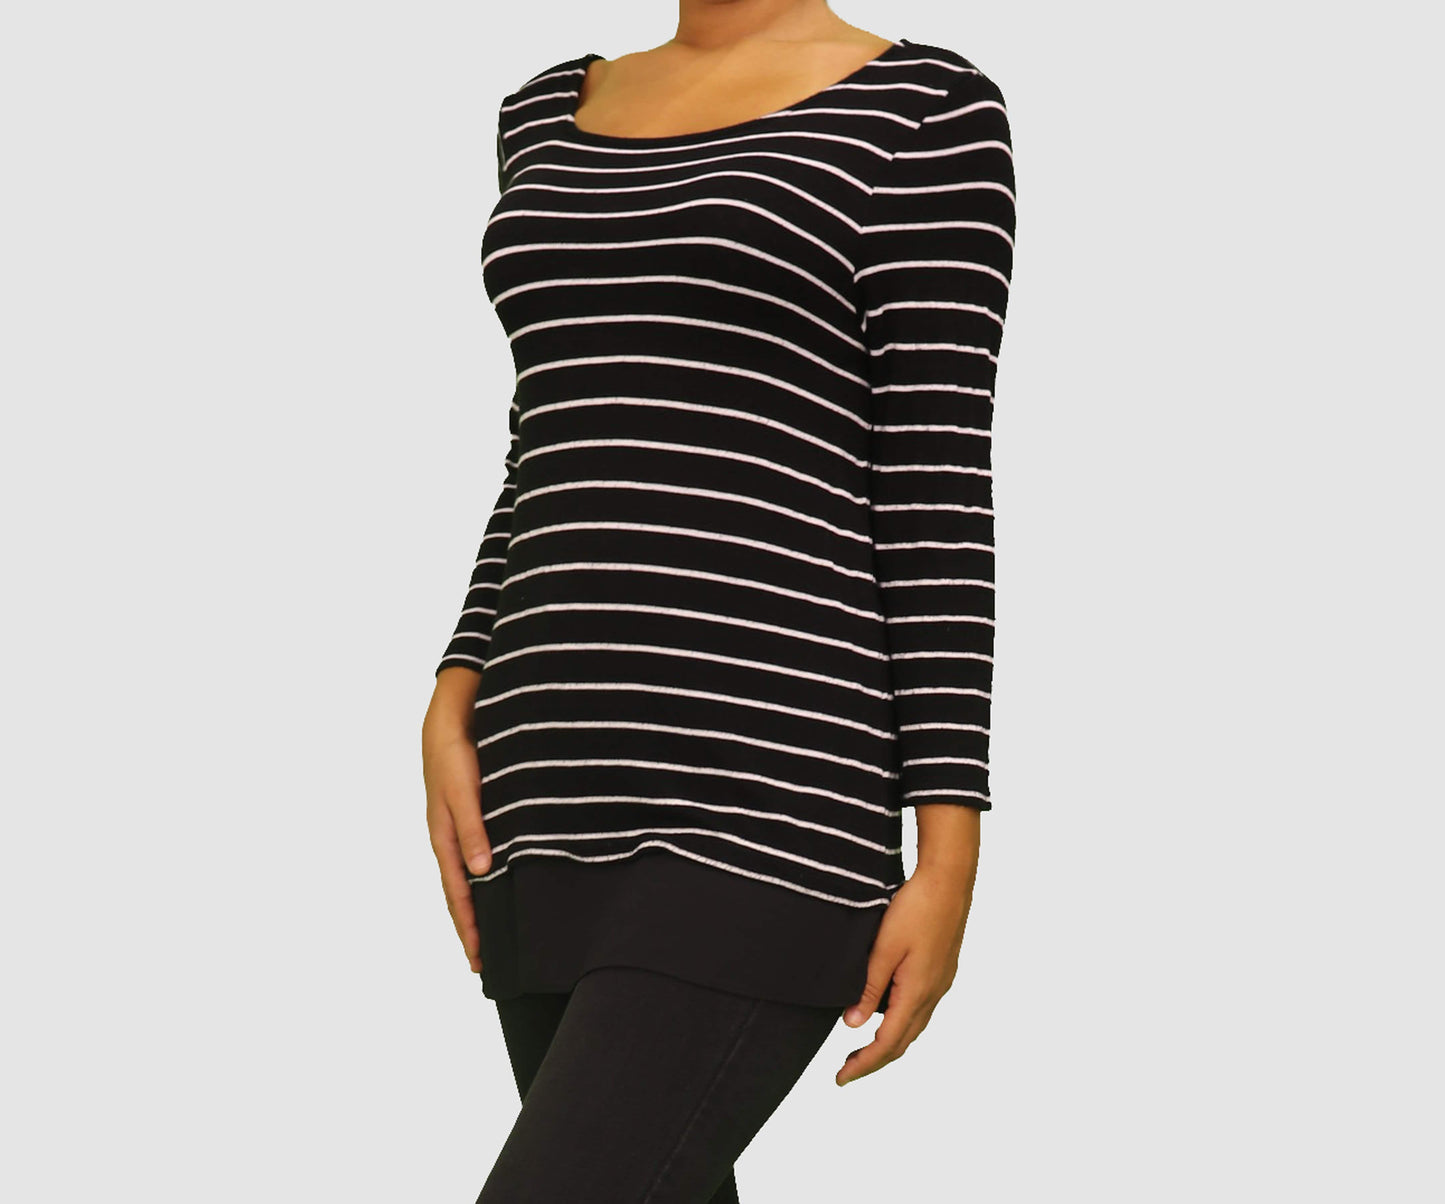 TALBOTS Womens Tops M / Black - White TALBOTS - Striped Long Sleeve Top